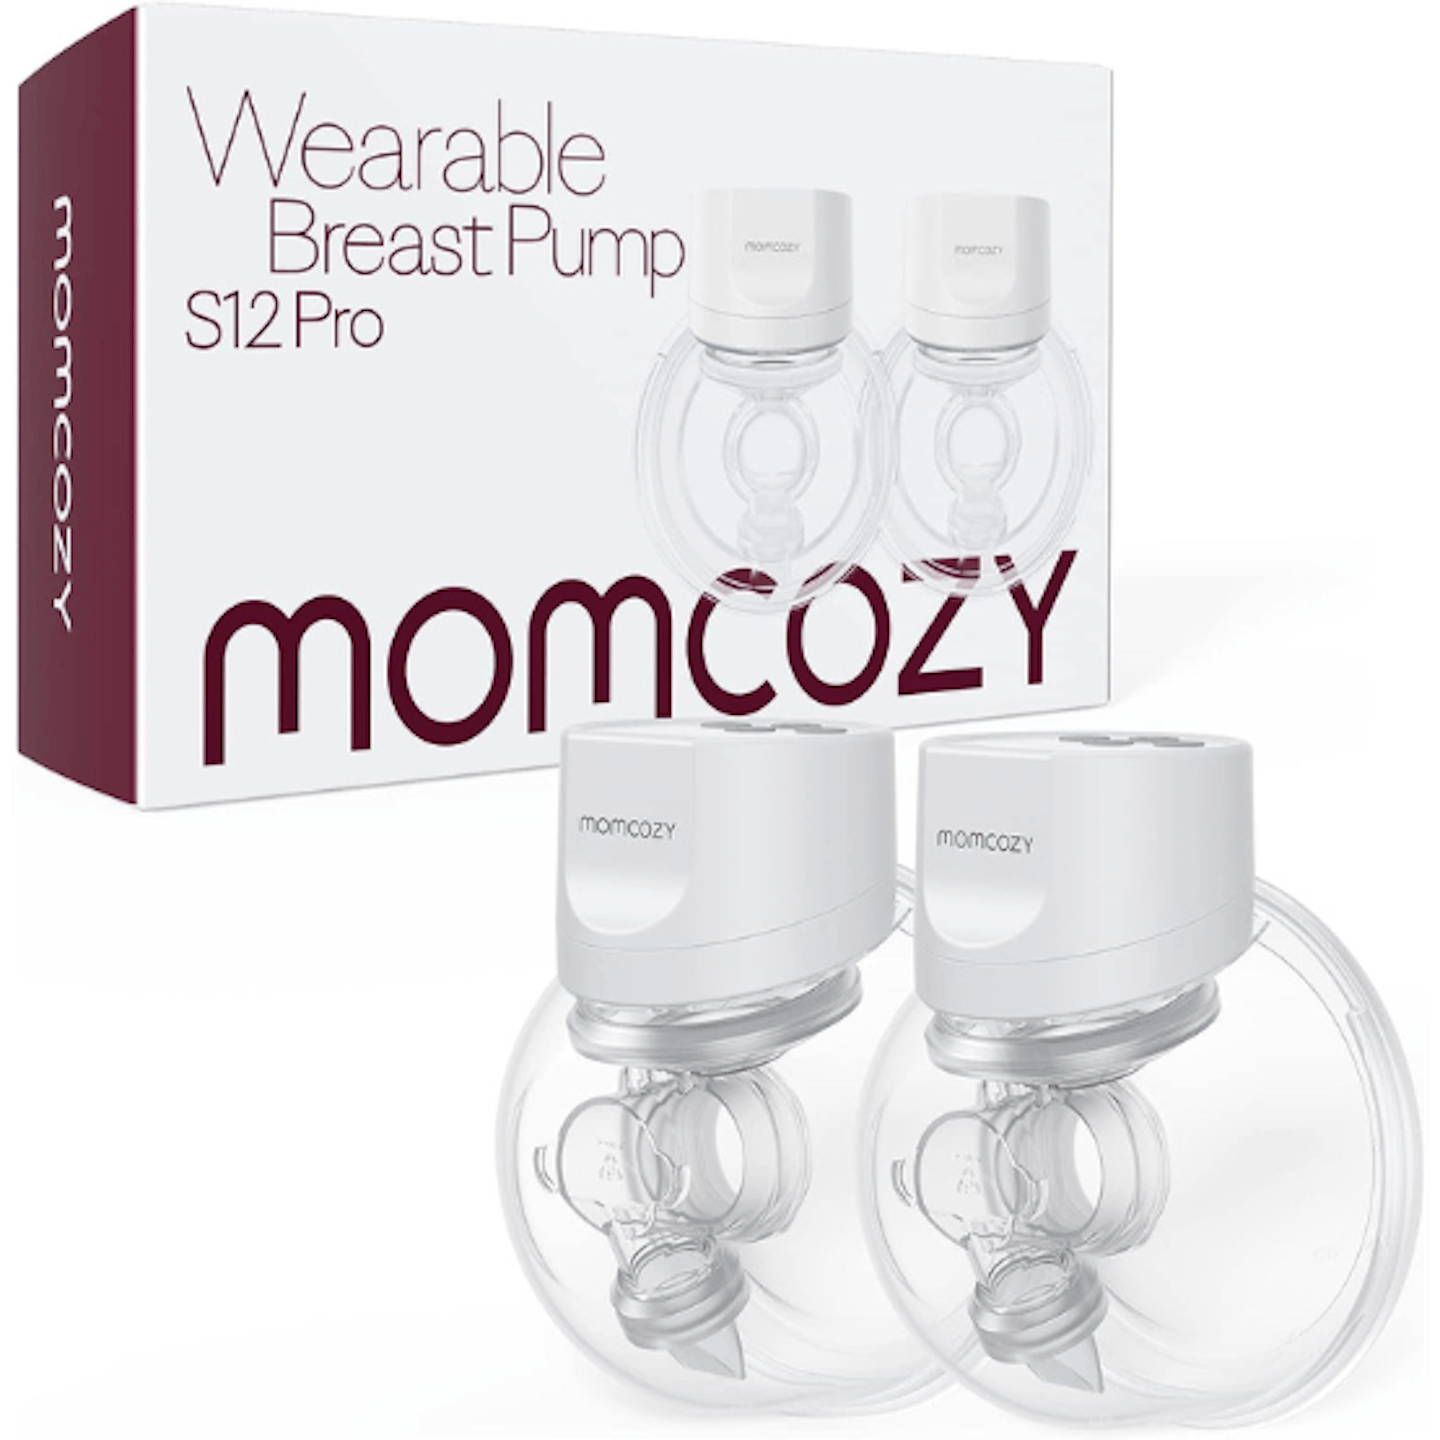 Momcozy S12 Pro Breast Pump